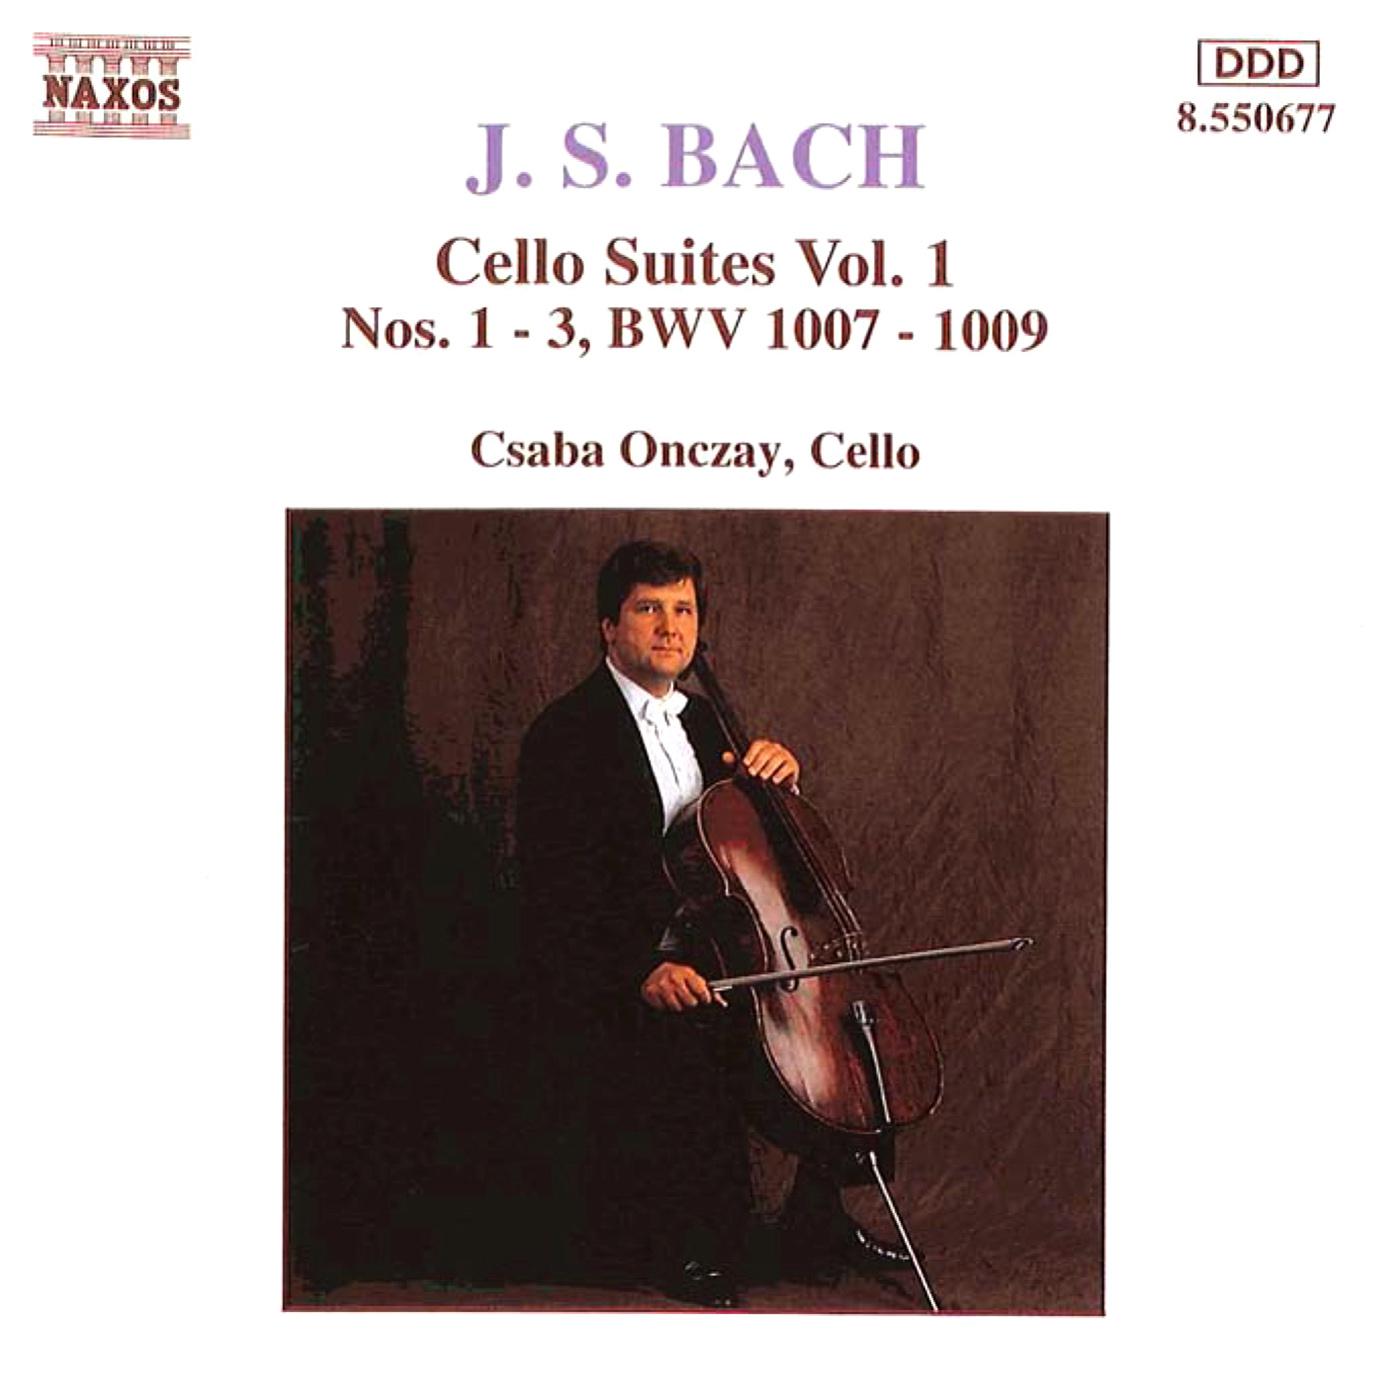 Csaba Onczay - Cello Suite No. 3 in C Major, BWV 1009:V. Bourree I and II